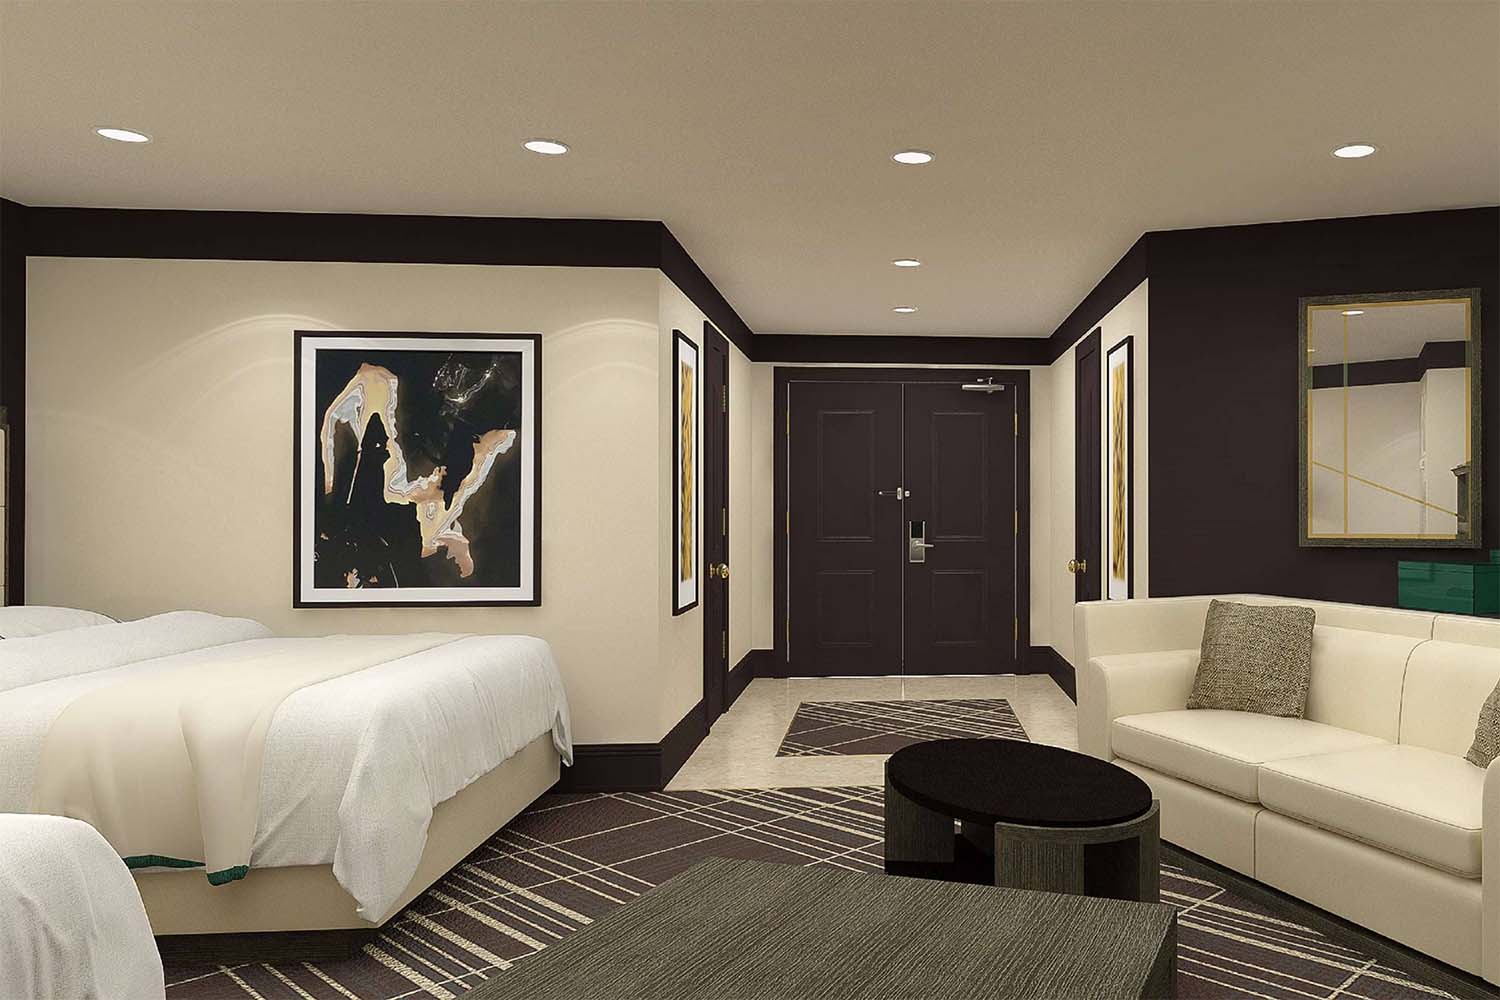 LV Bedding Sets Duvet Cover LV Bedroom Sets Luxury Brand Bedding Limited  Edition